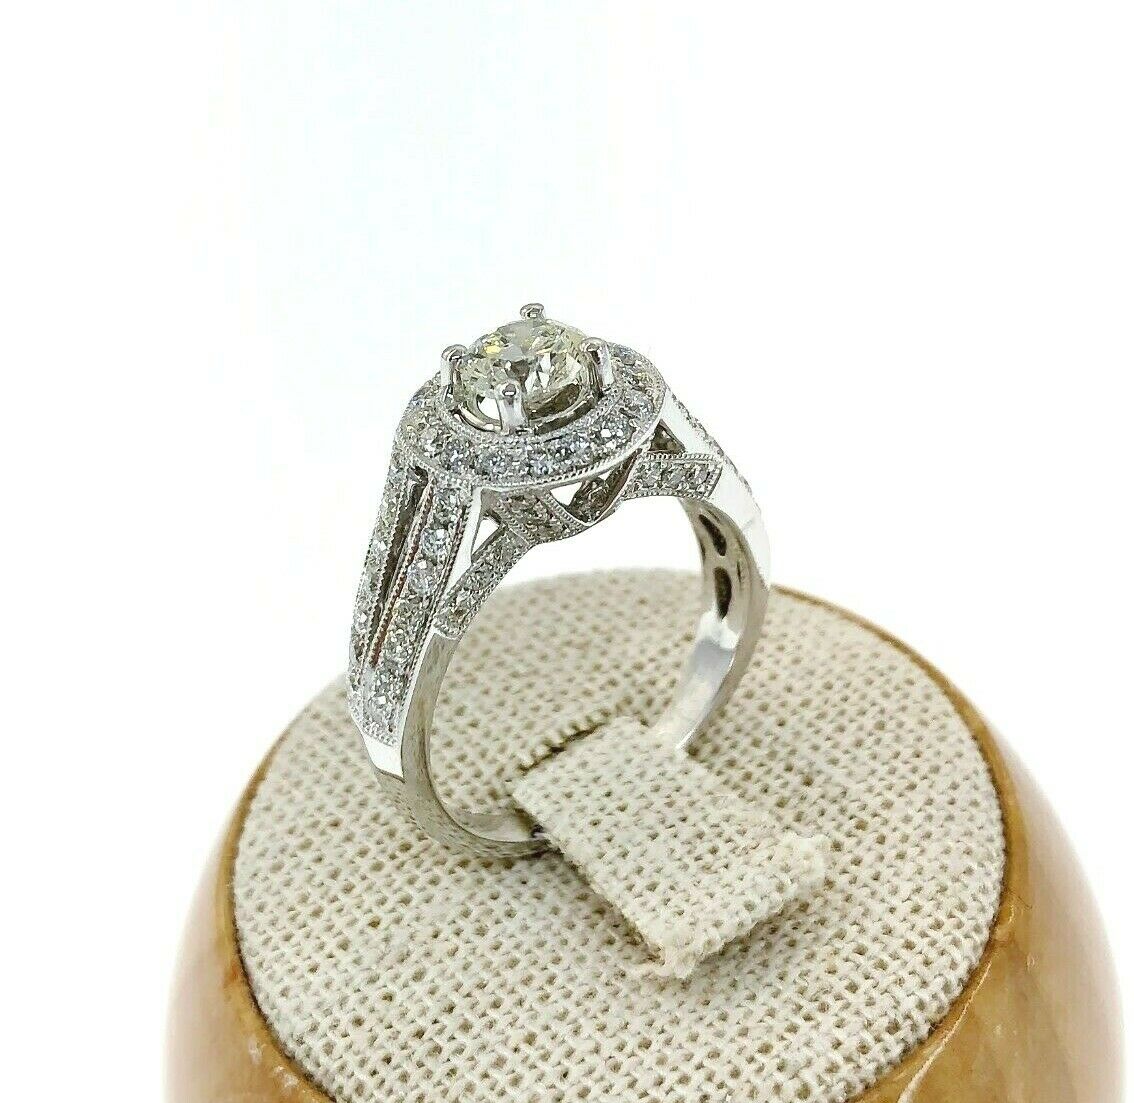 1.54 Carats t.w. Diamond Halo/Diamond Gallery Wedding/Engagement Ring 18K Gold